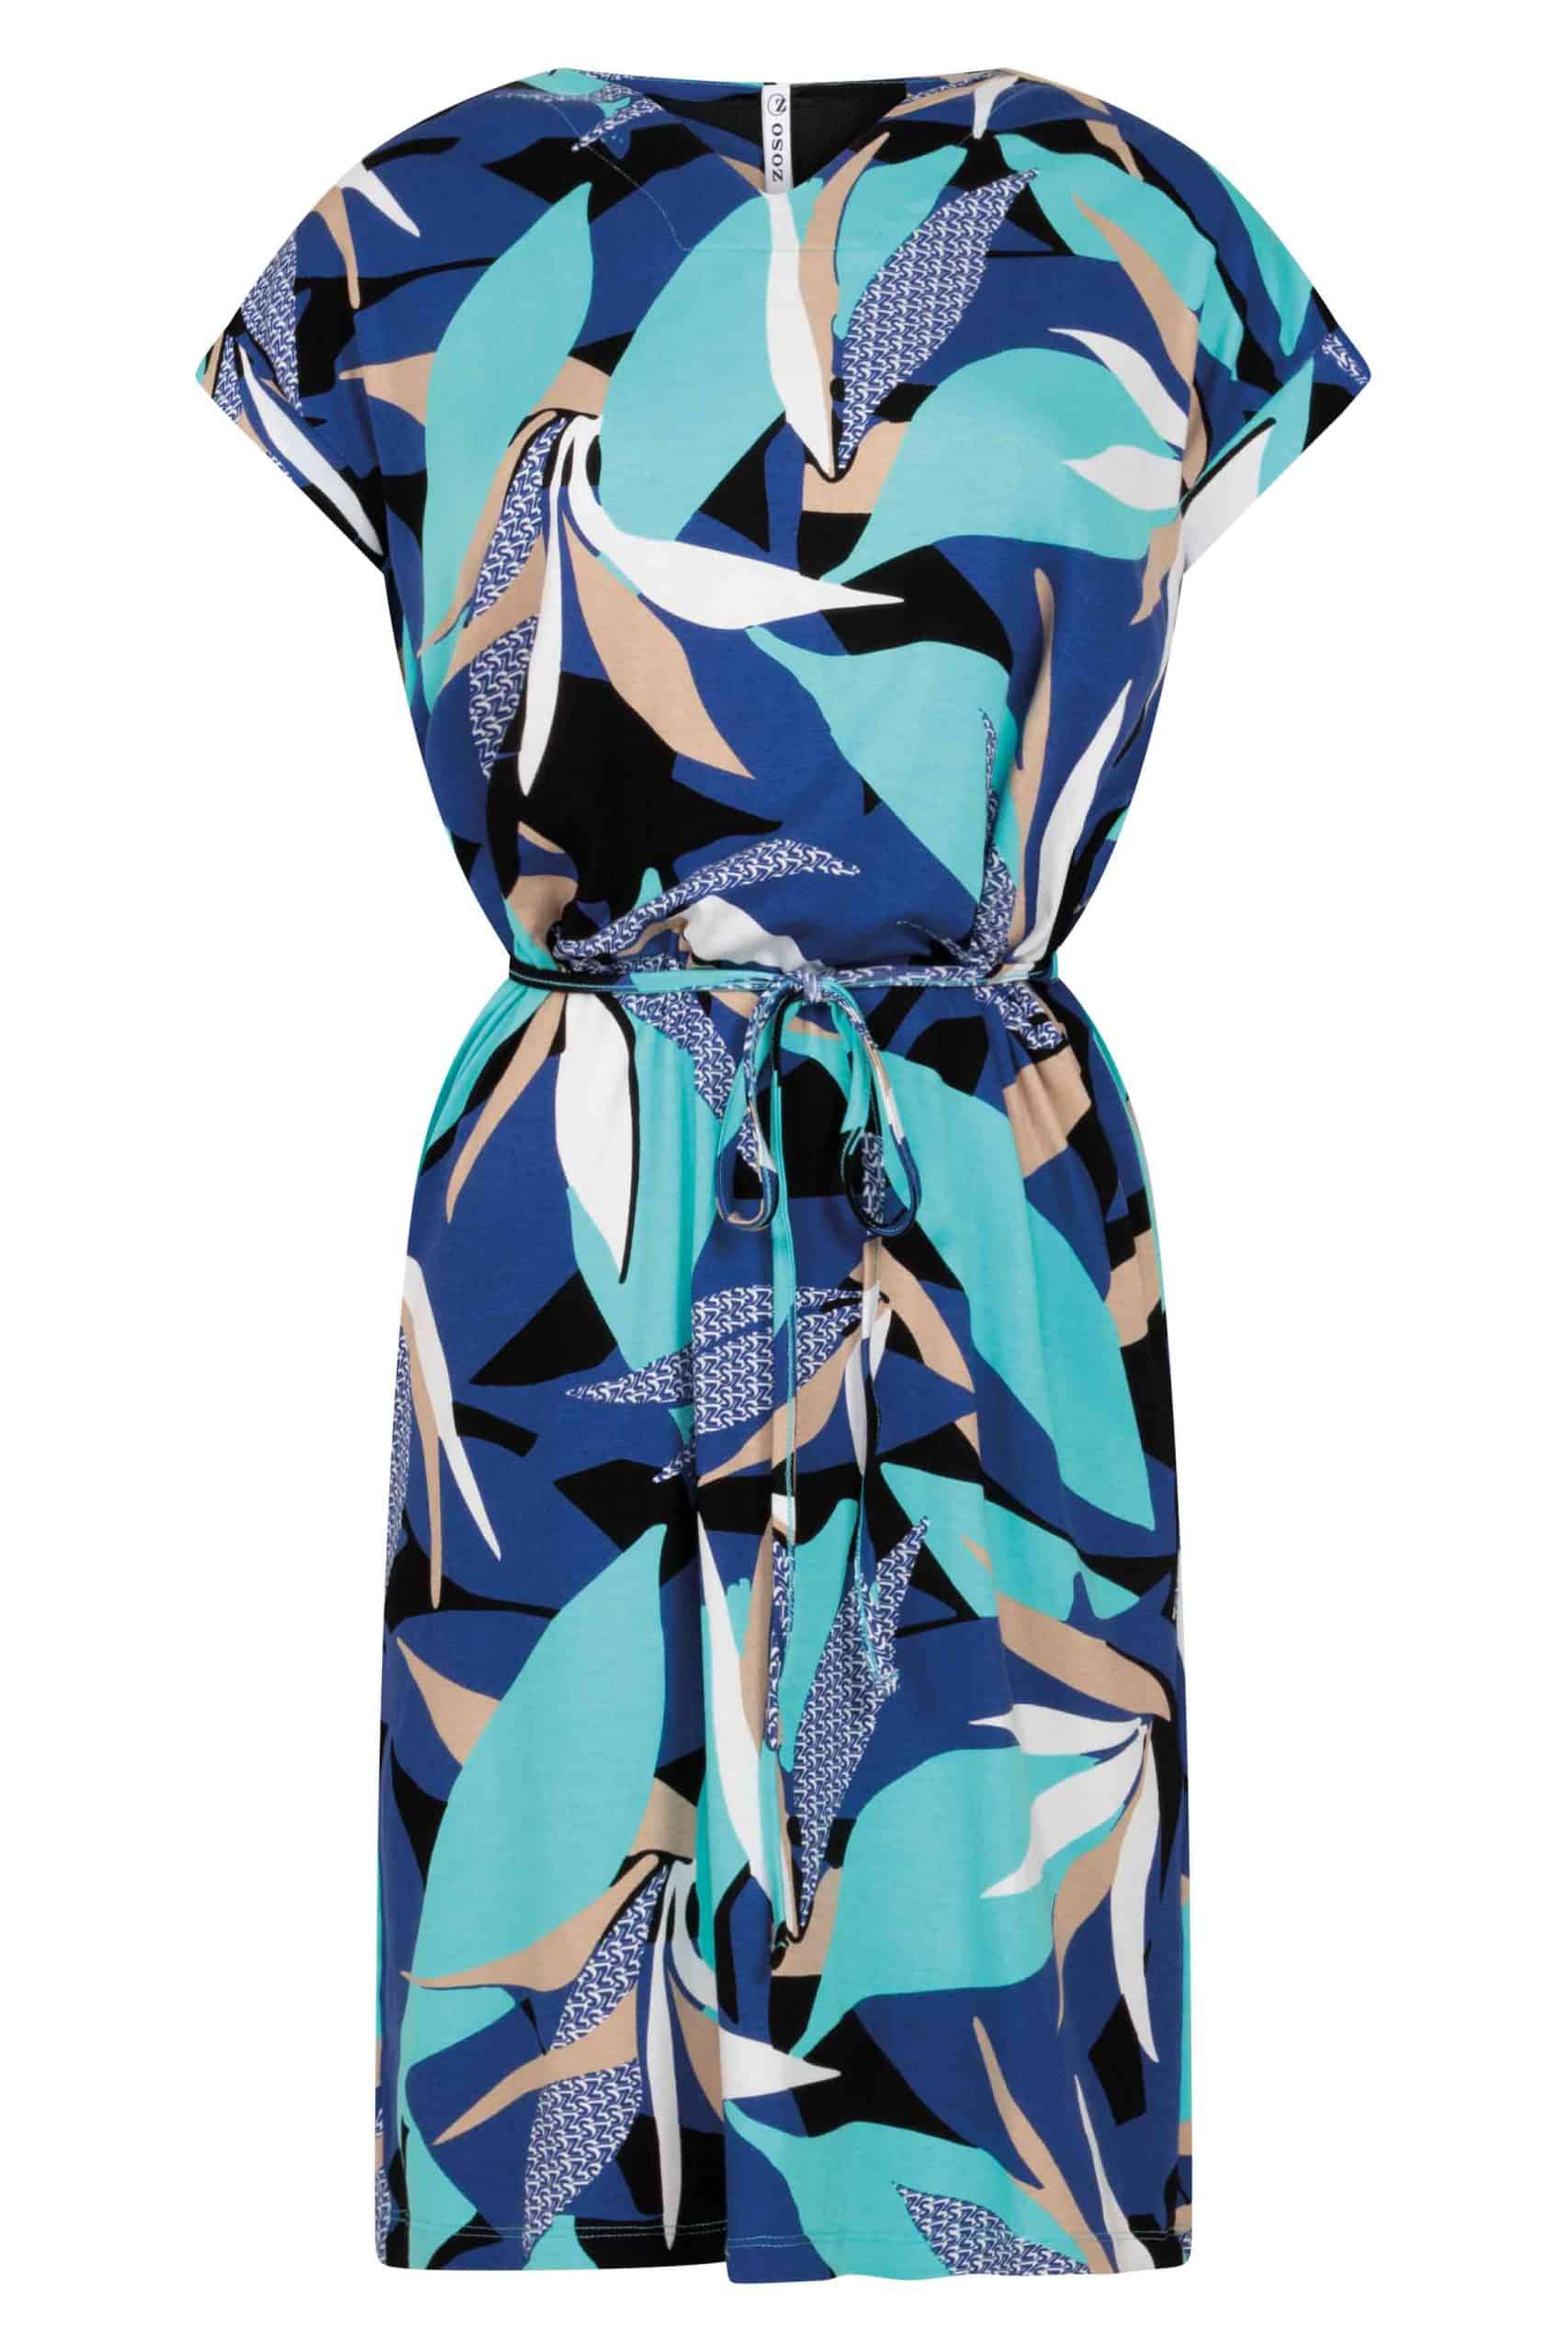 Zoso 223 Jacky Printed Dress Sea Blue